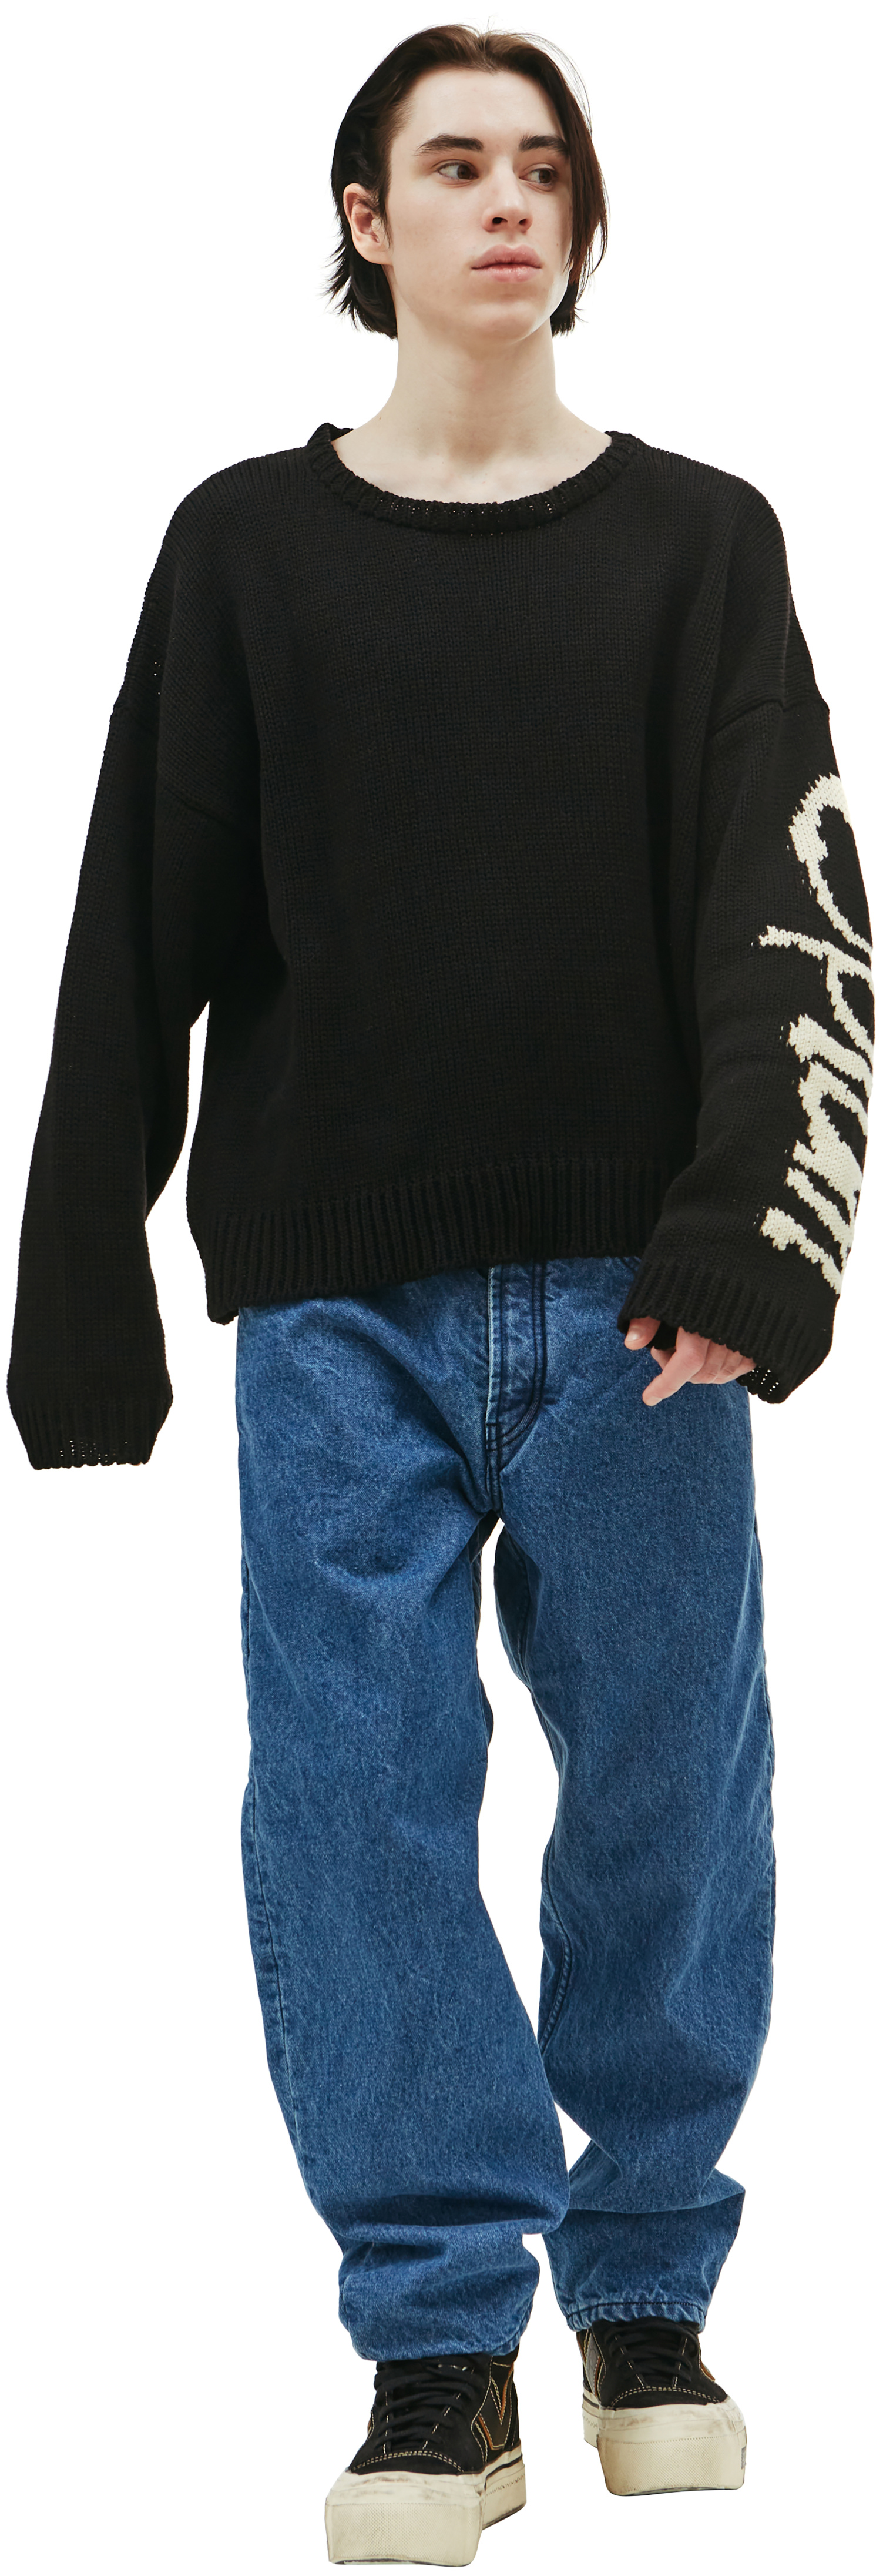 Enfants Riches Deprimes Opium wool sweater